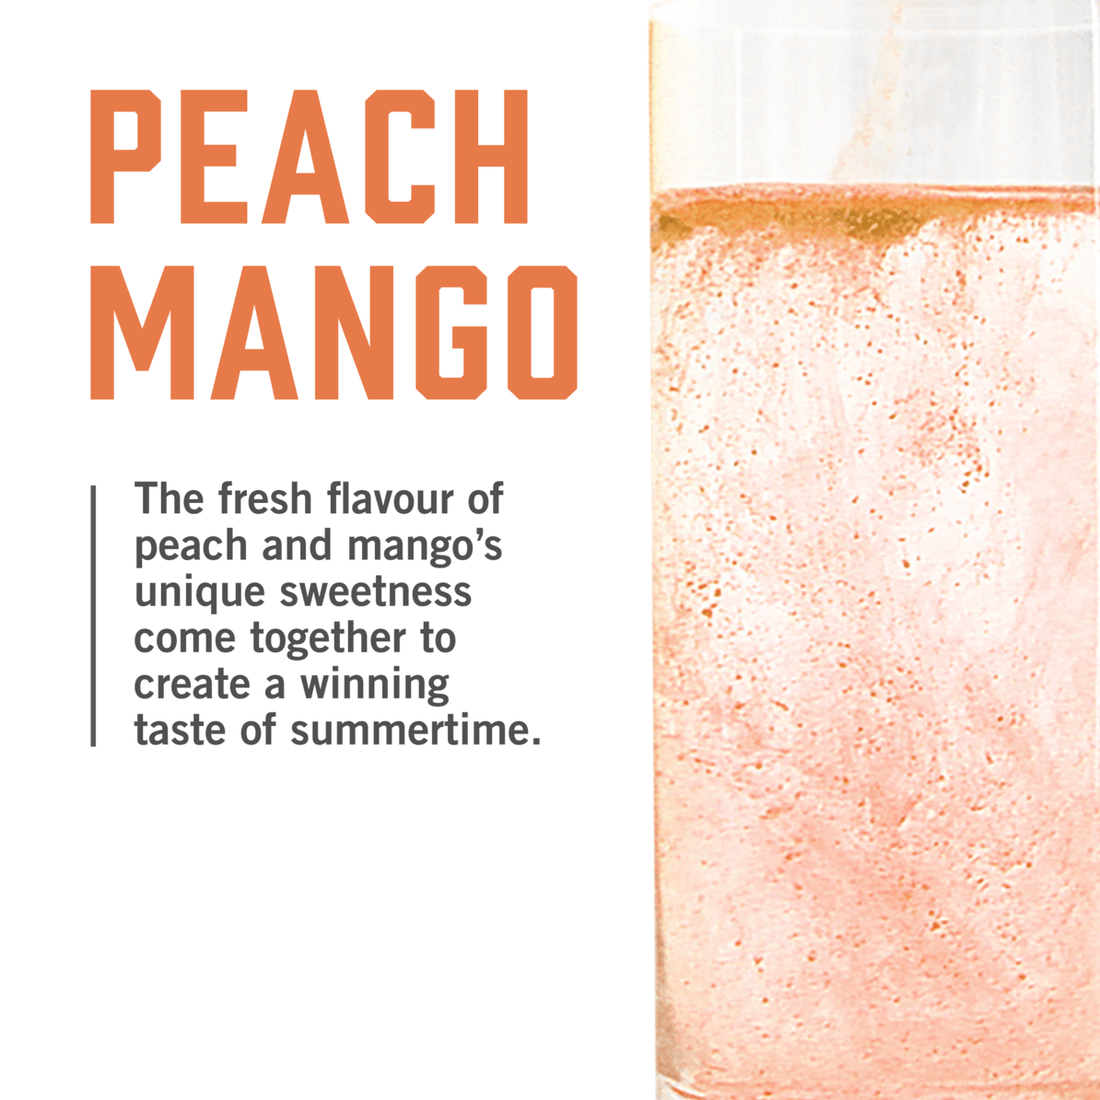 HYDRATION MIX / Peach Mango - 100 Servings